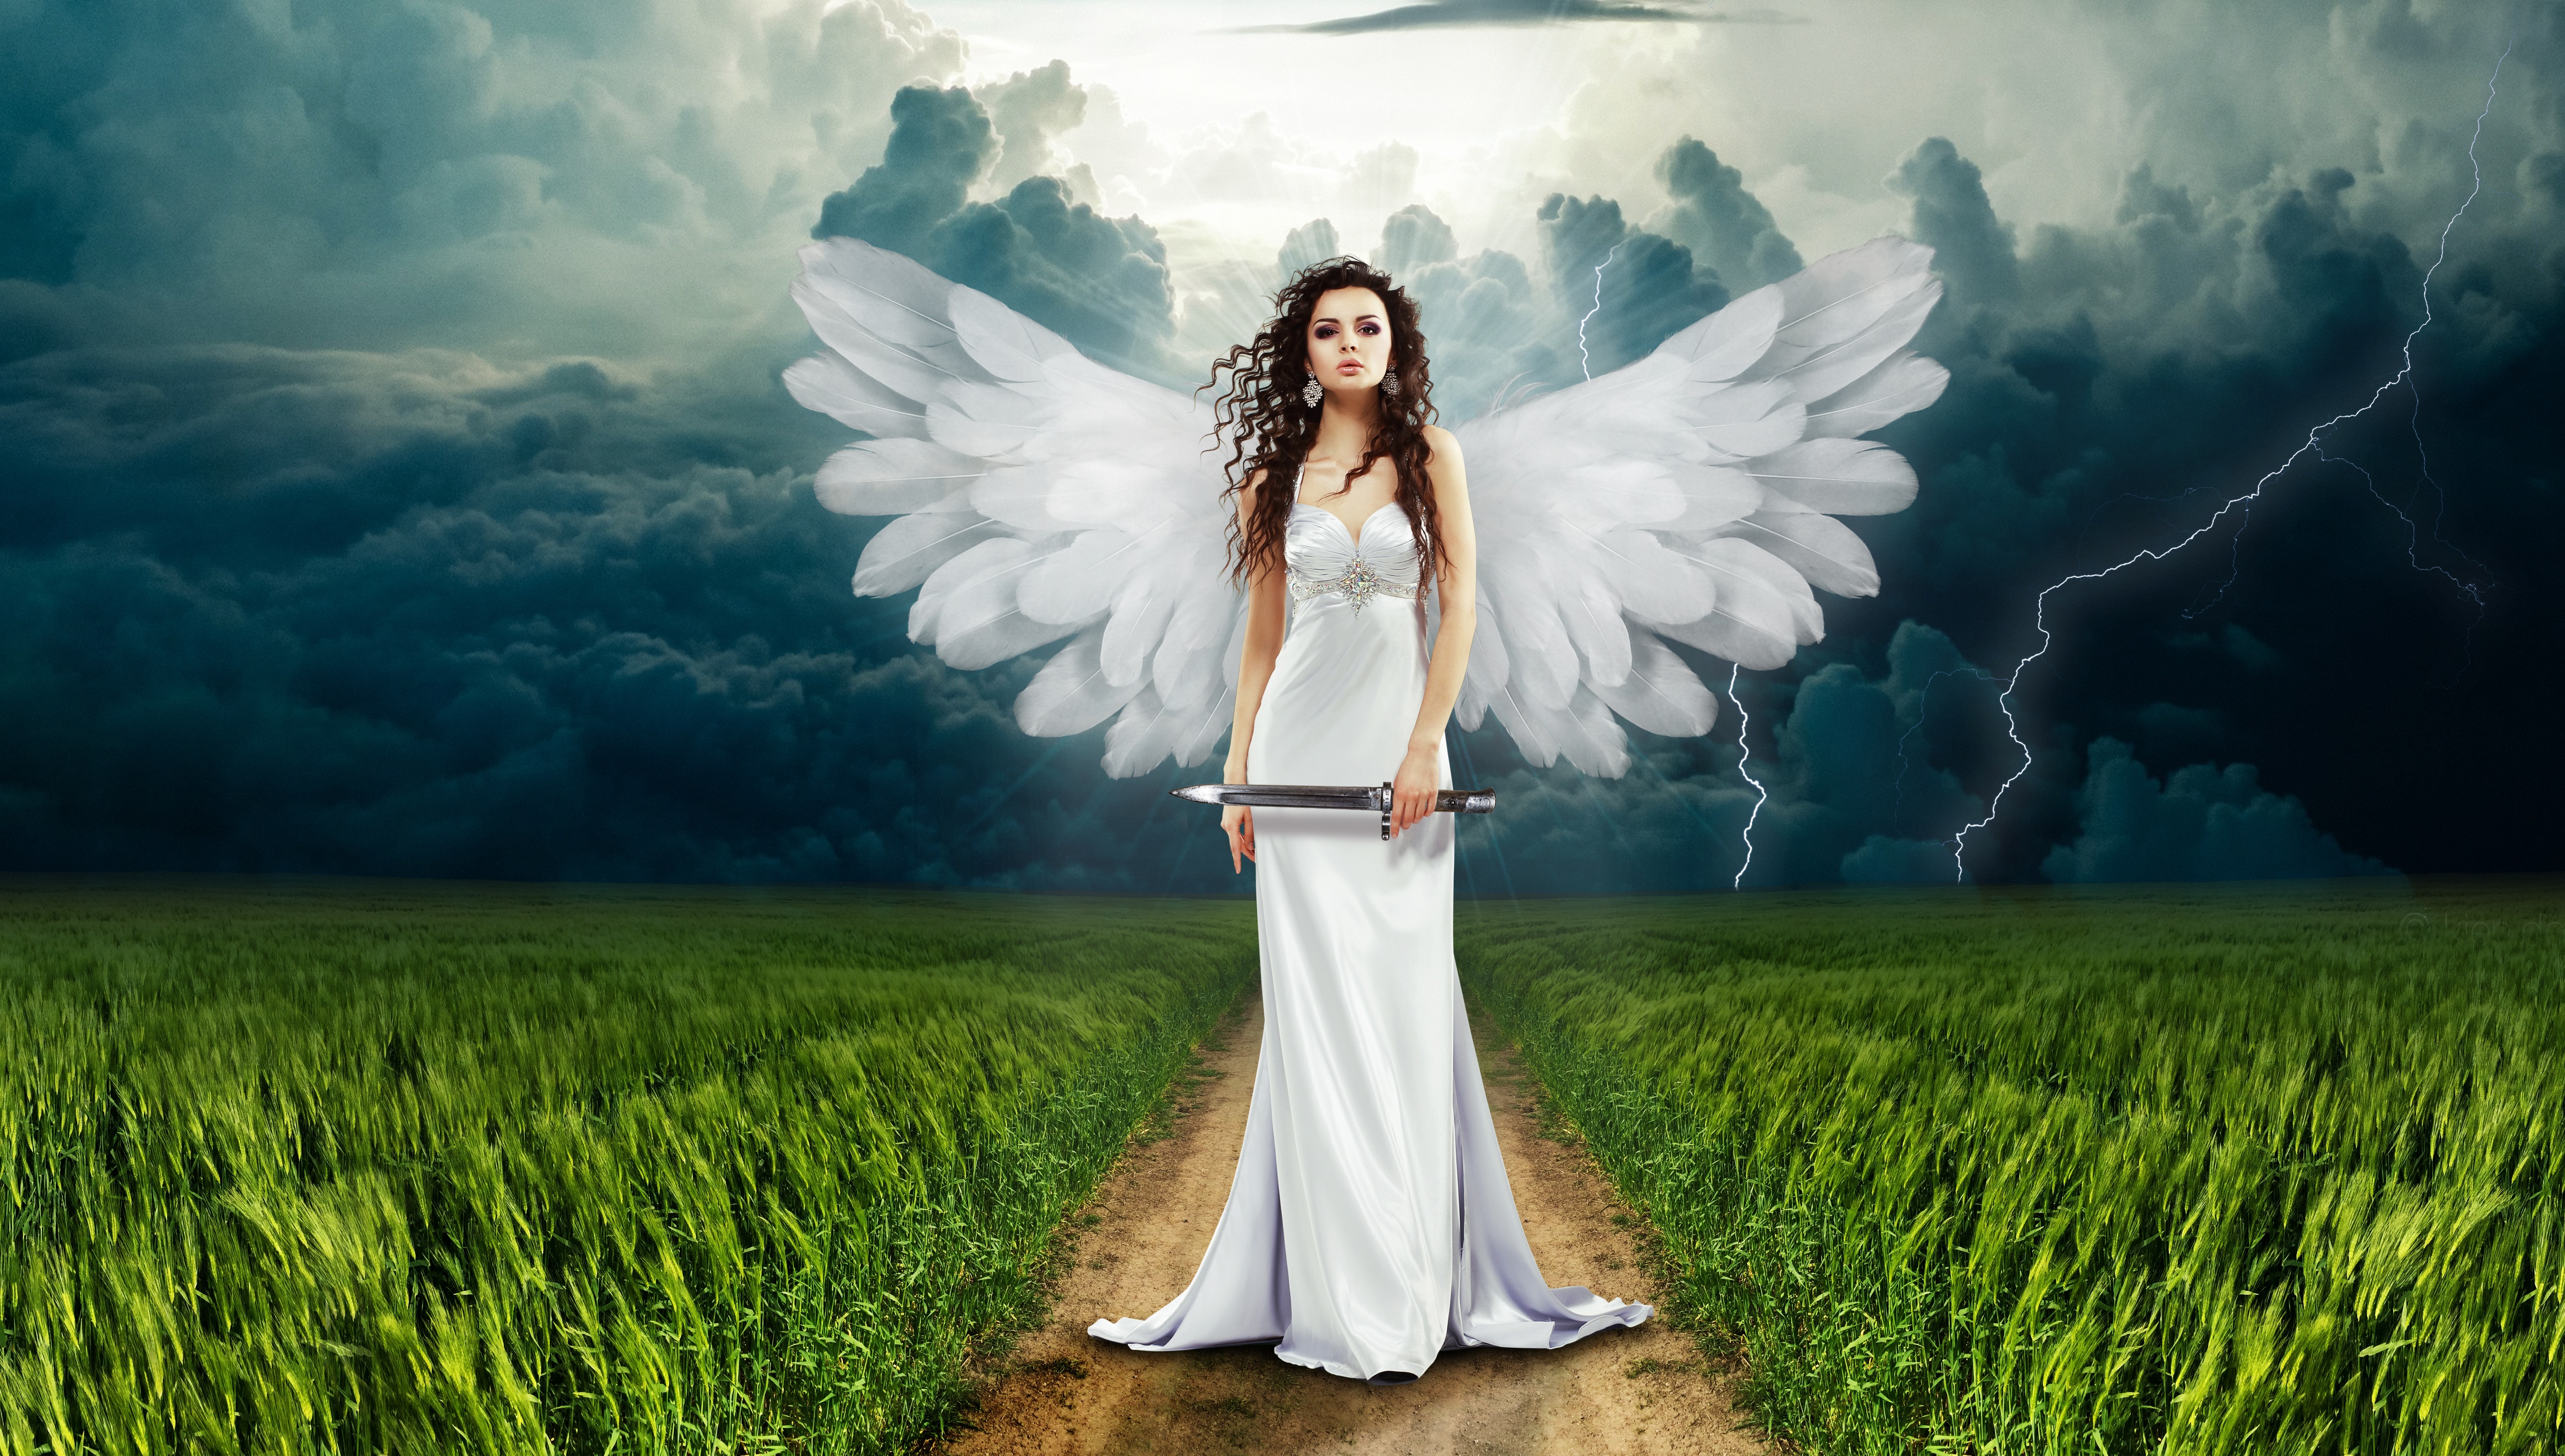 Angels women. Женщина ангел. Женщина с крыльями. Картинка ангела. Девушка ангел с крыльями.